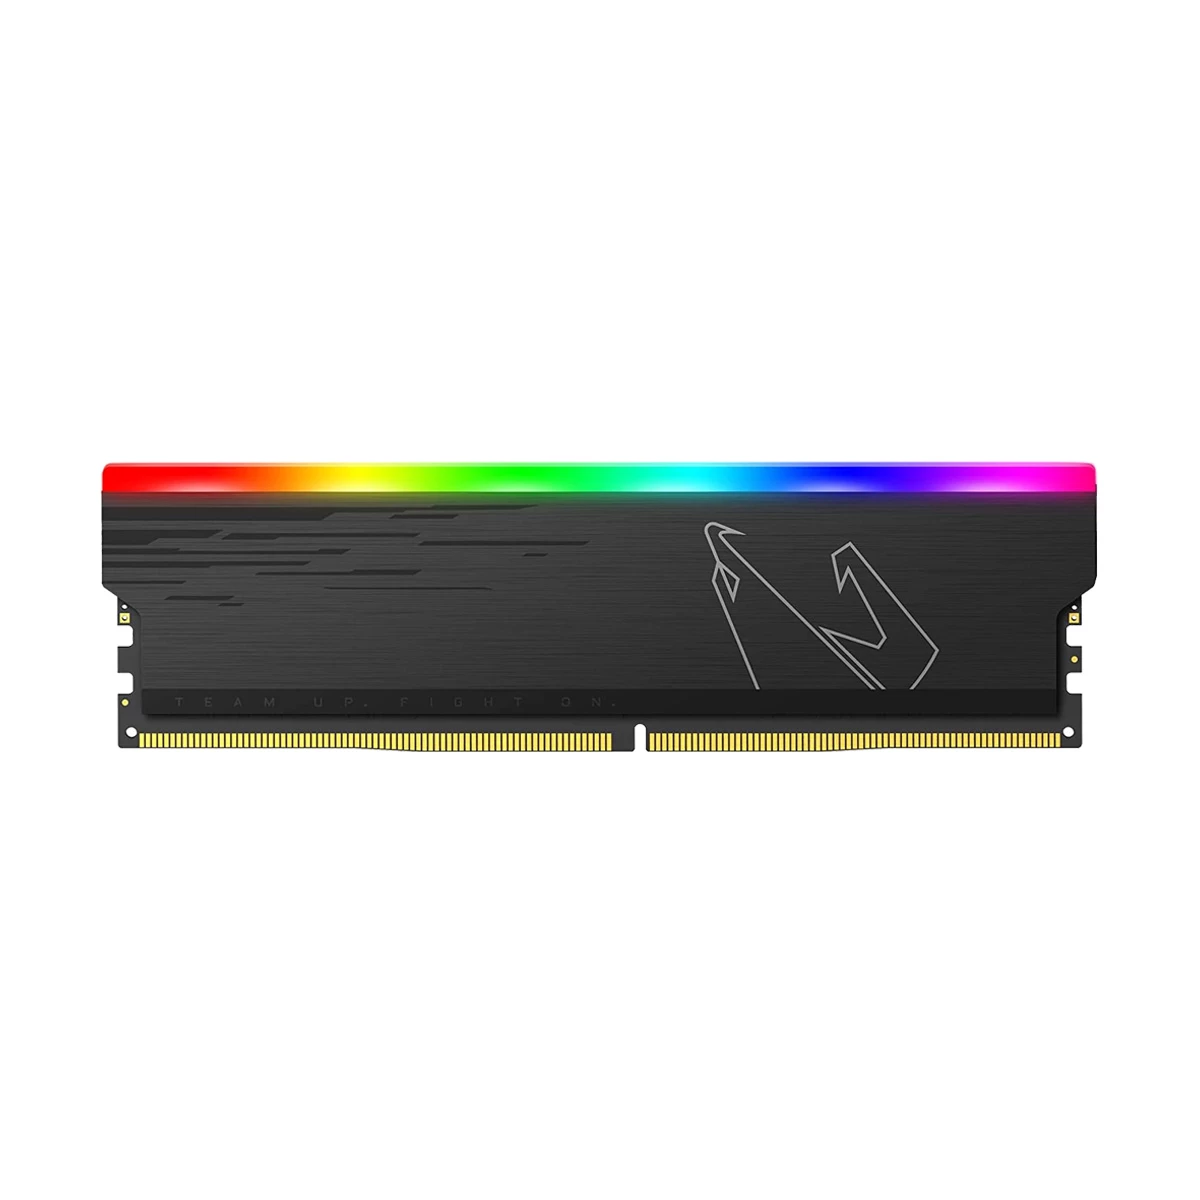 Gigabyte Aorus 8GB RGB DDR4 4400MHz Desktop RAM #GP-ARS16G44